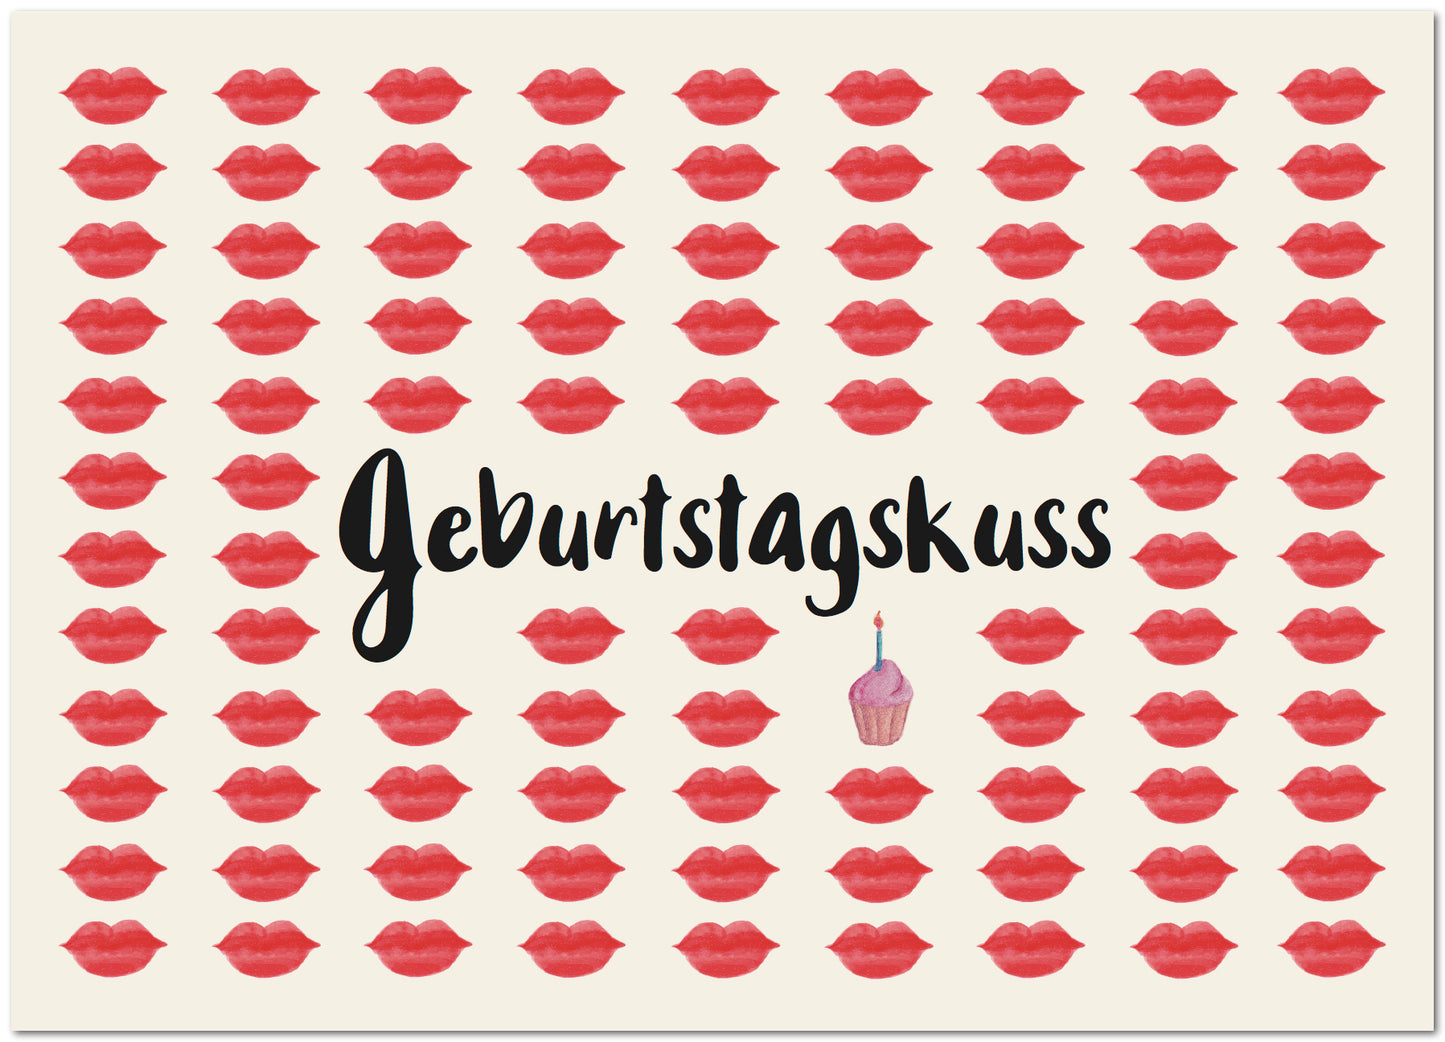 Postkarte "Geburtstagskuss"